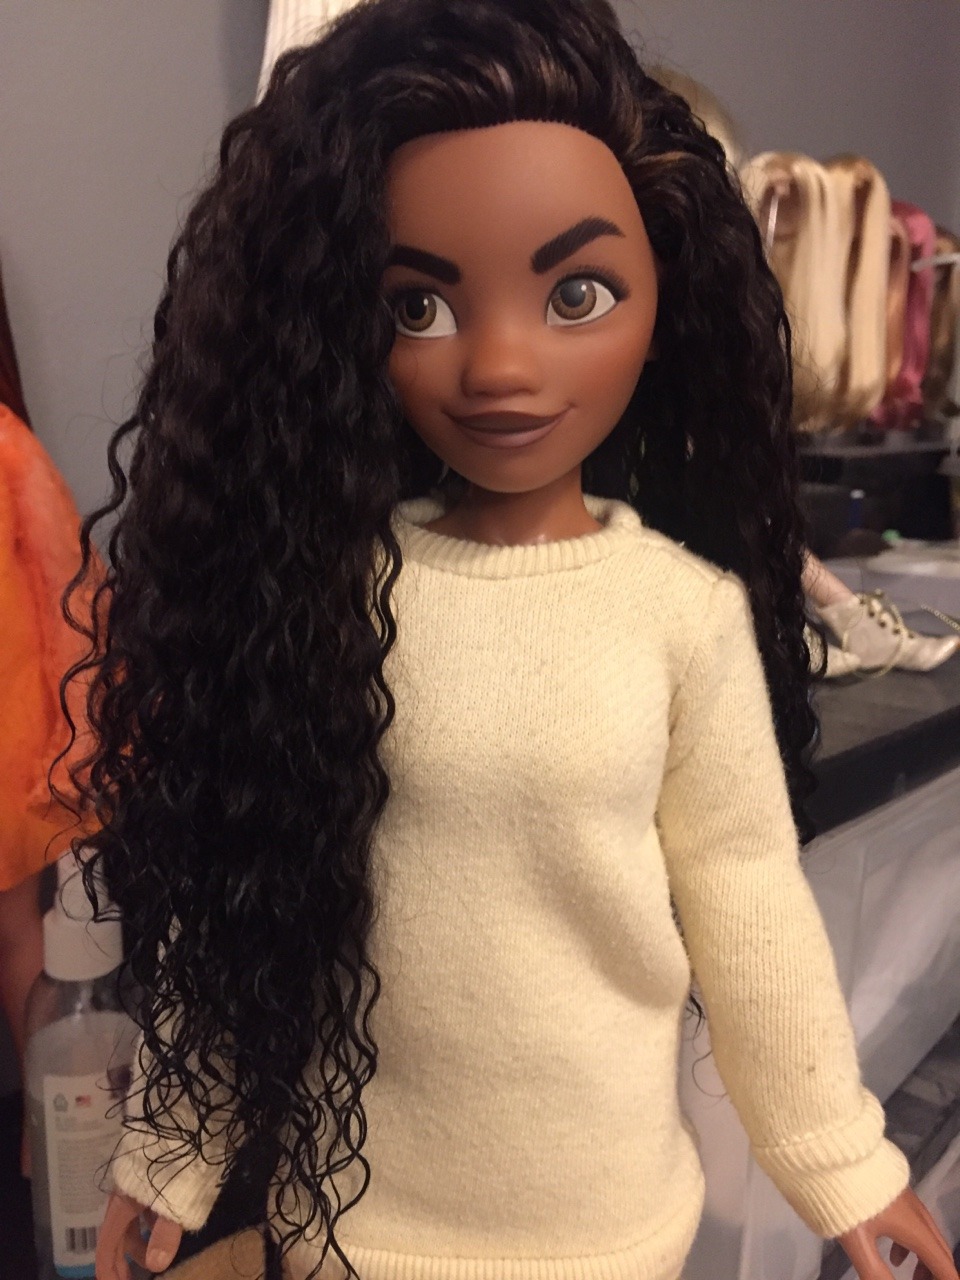 moana hair styling doll